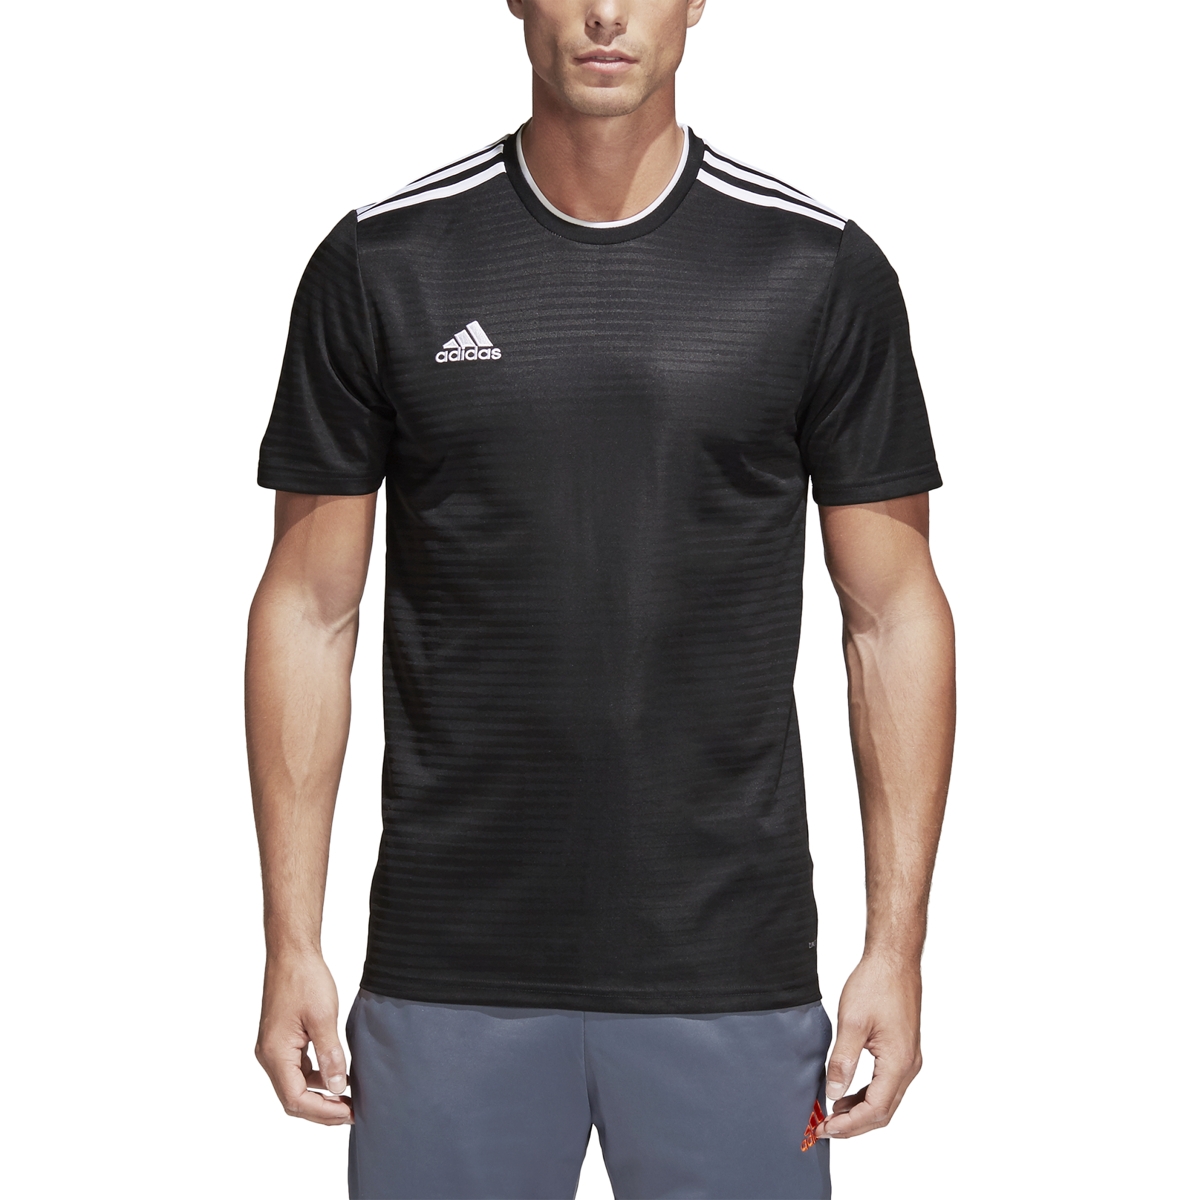 Adidas Condivo 18 Jersey - Soccer Premier